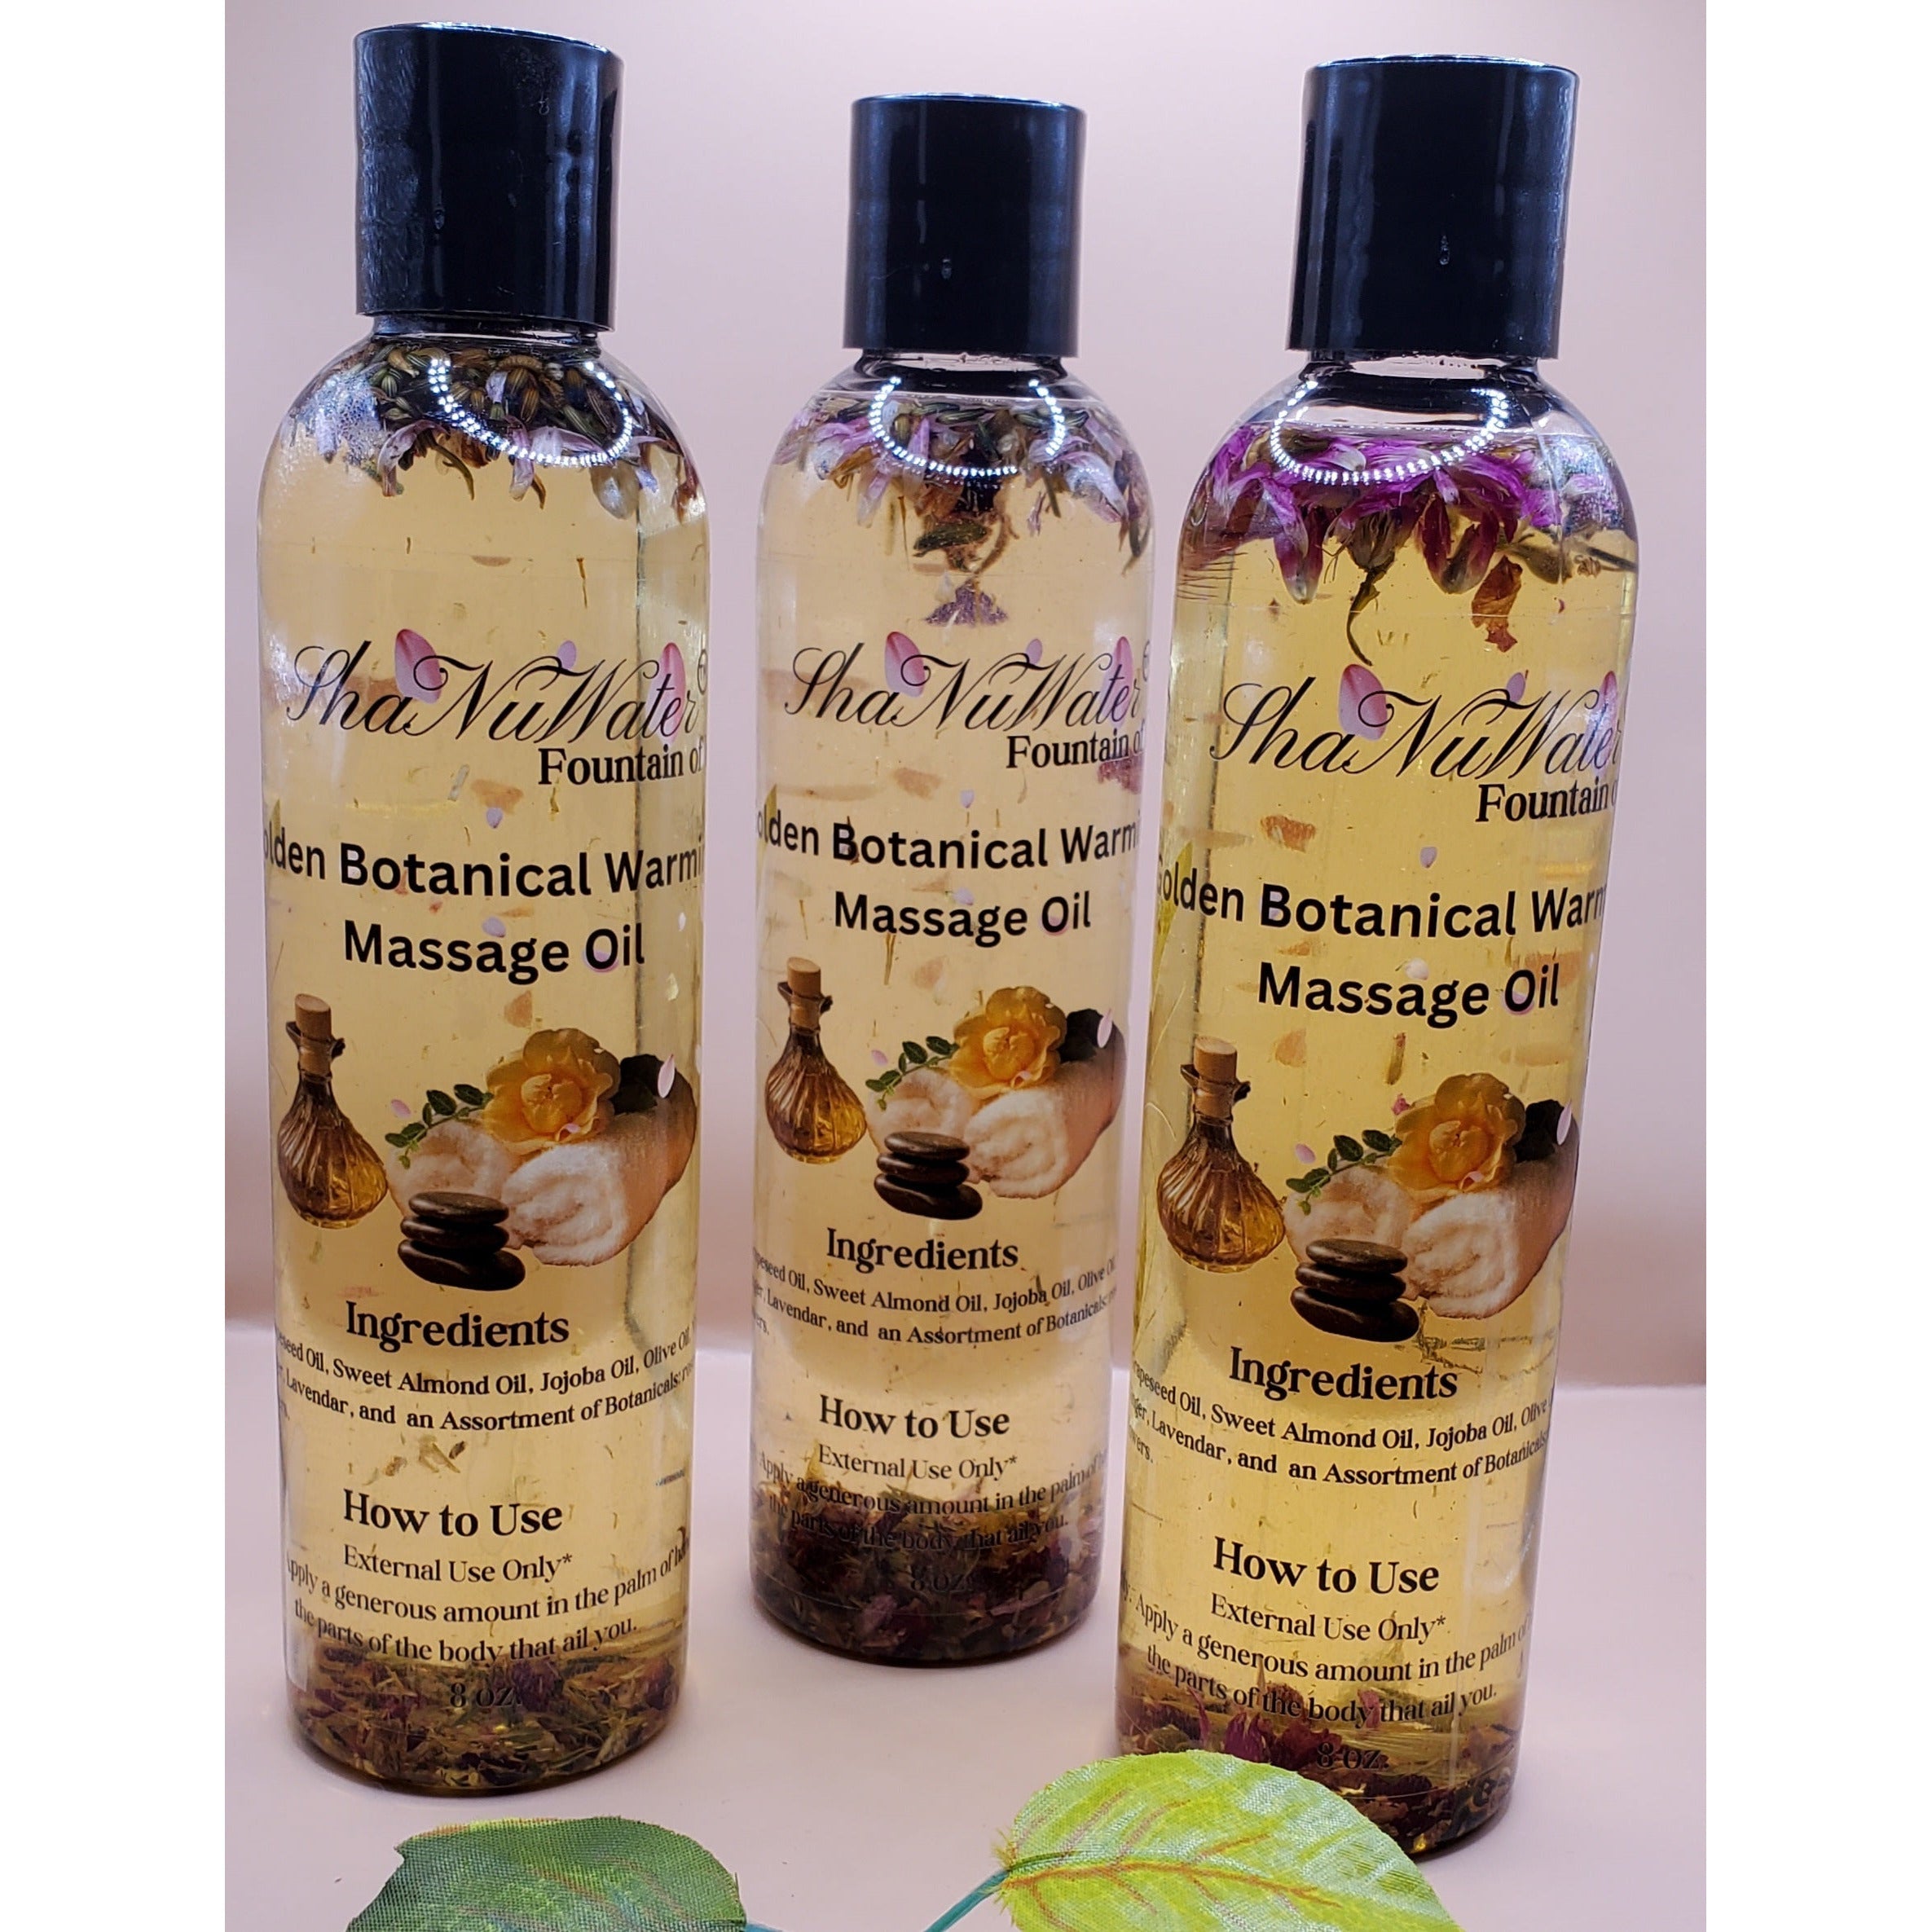 Golden Botanical Massage Oil